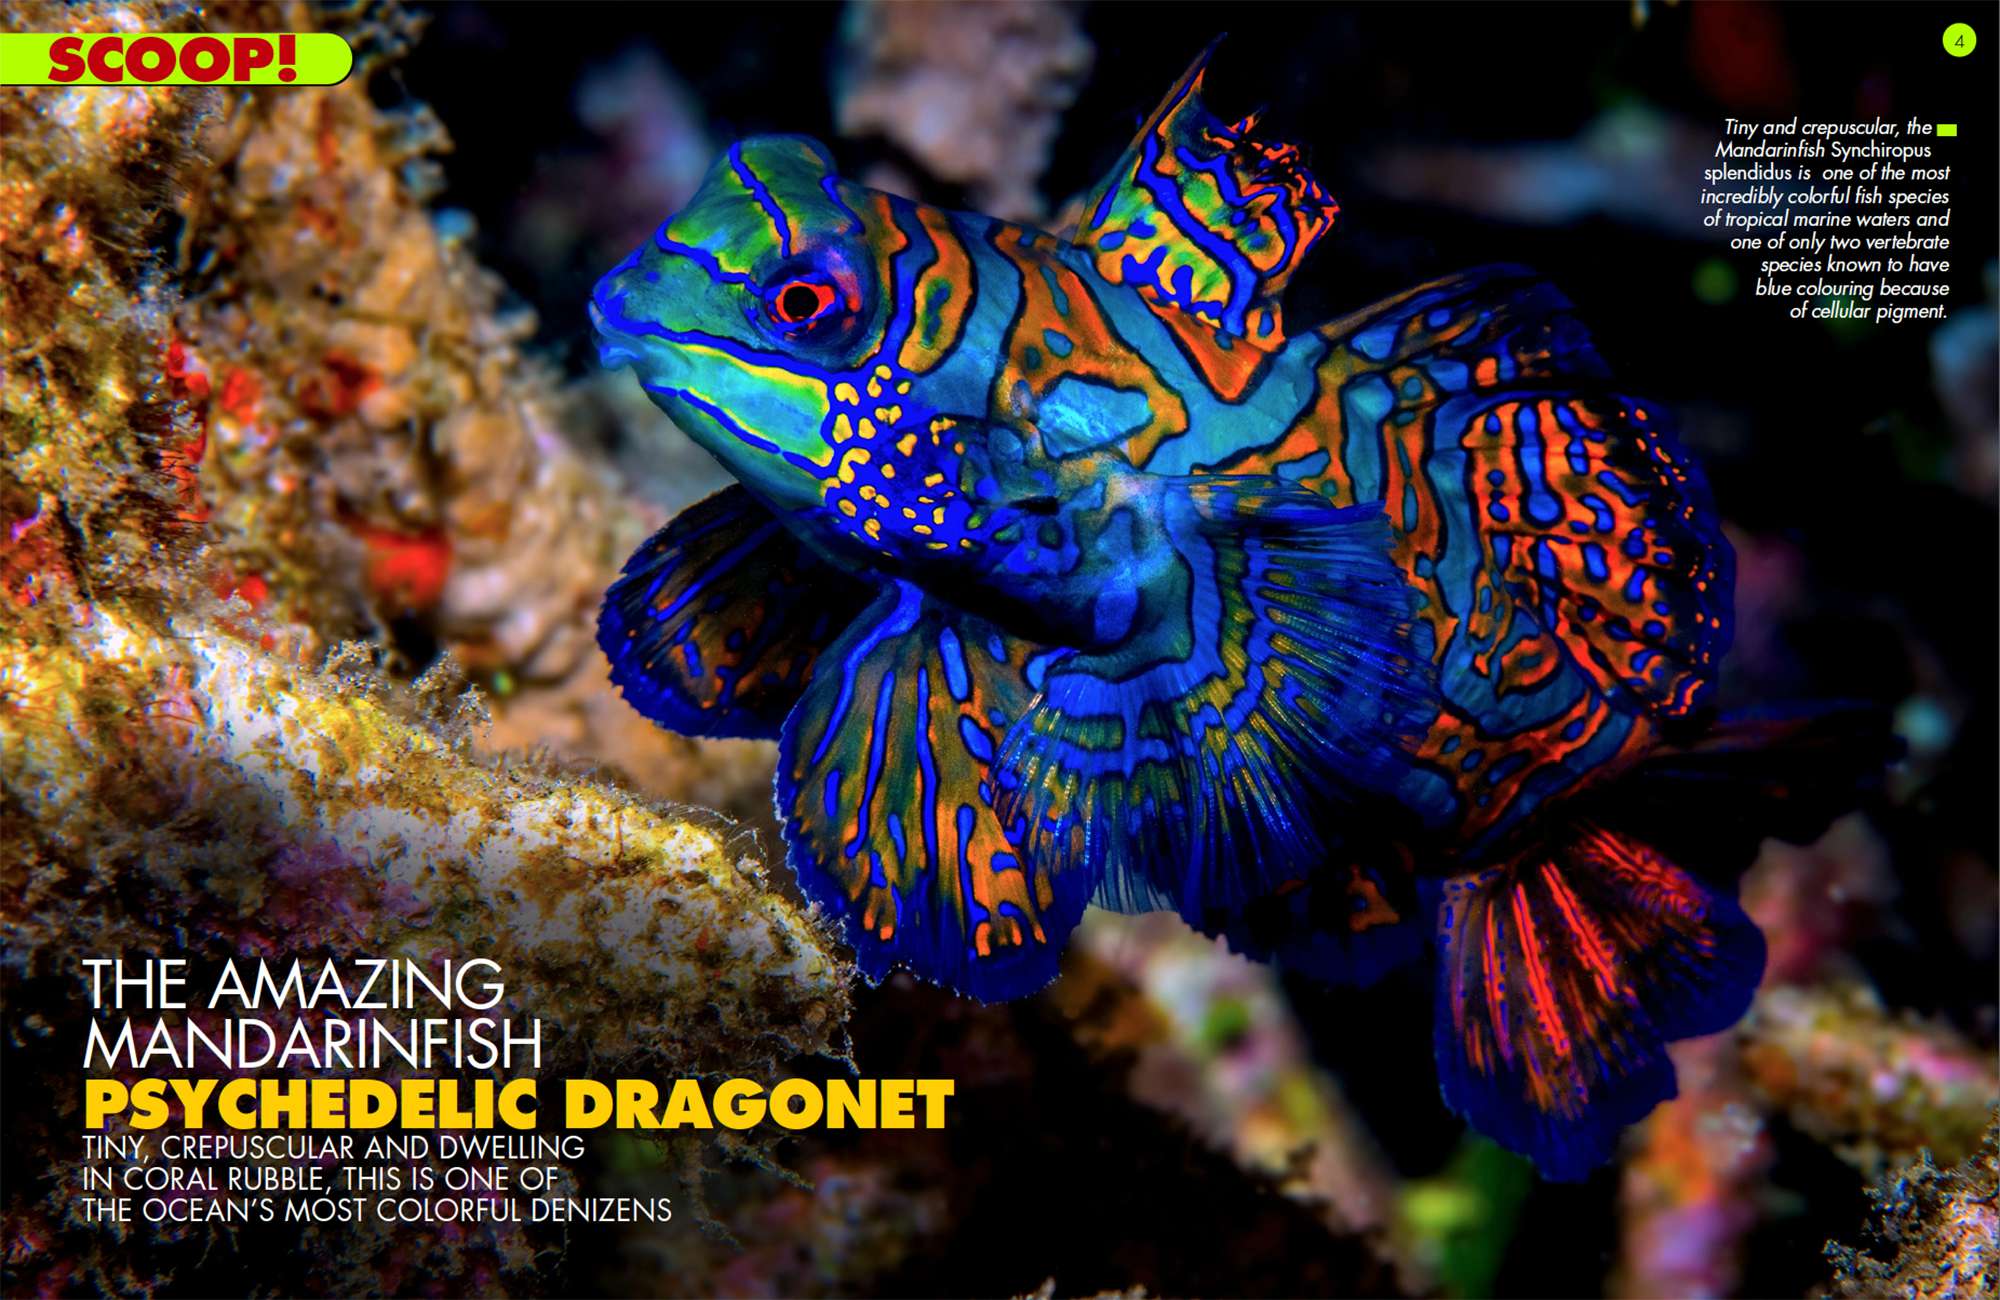 The Amazing Mandarinfish Psychedelic Dragonet